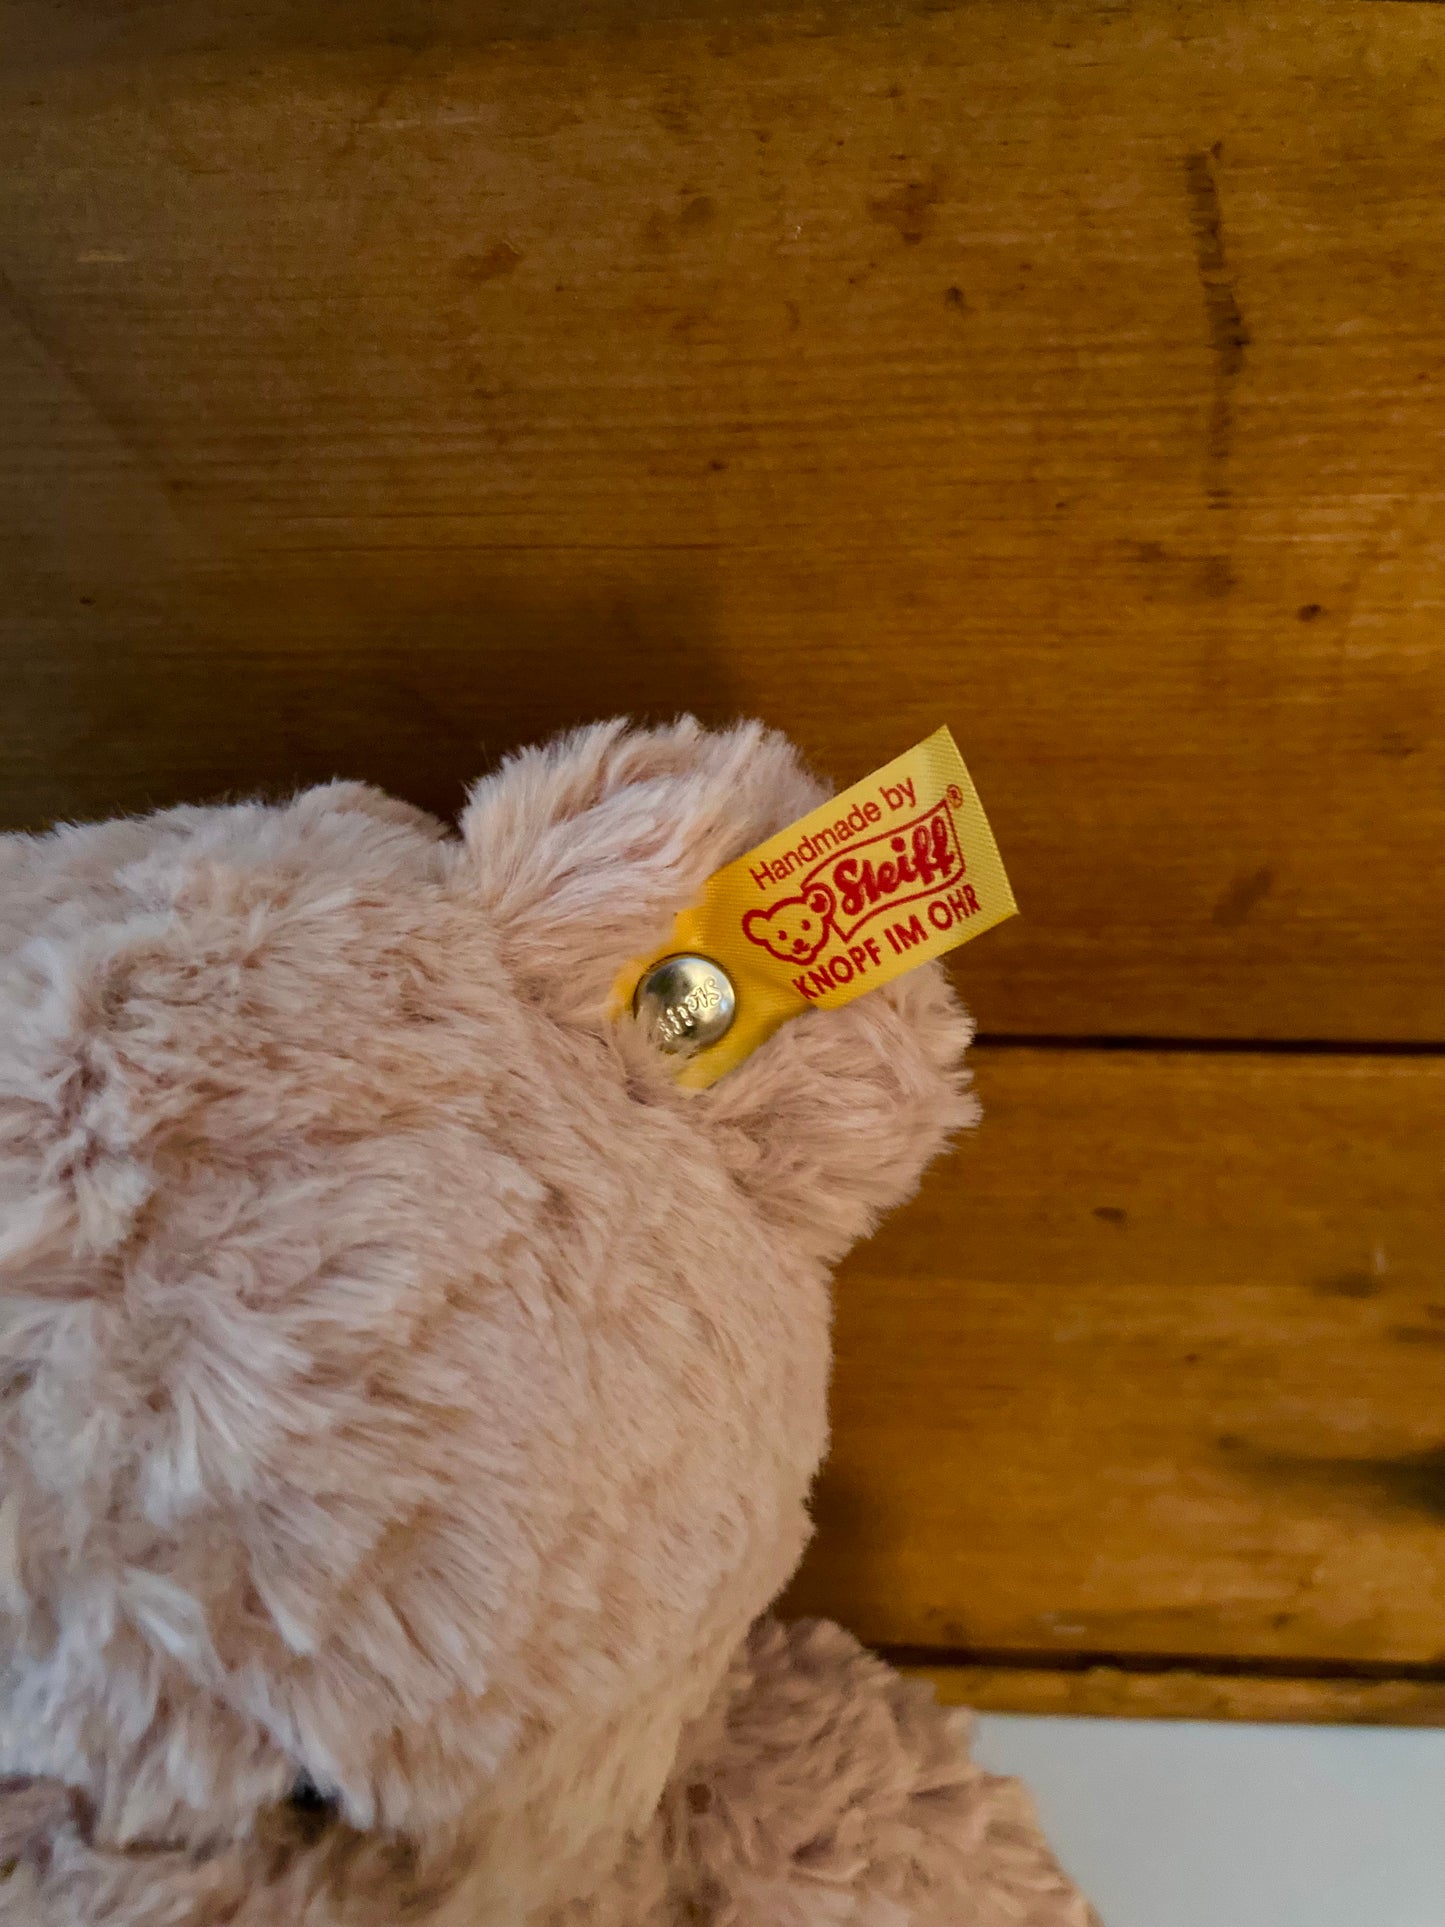 Peluche douce pour bébé - Steiff TEDDY BEAR 